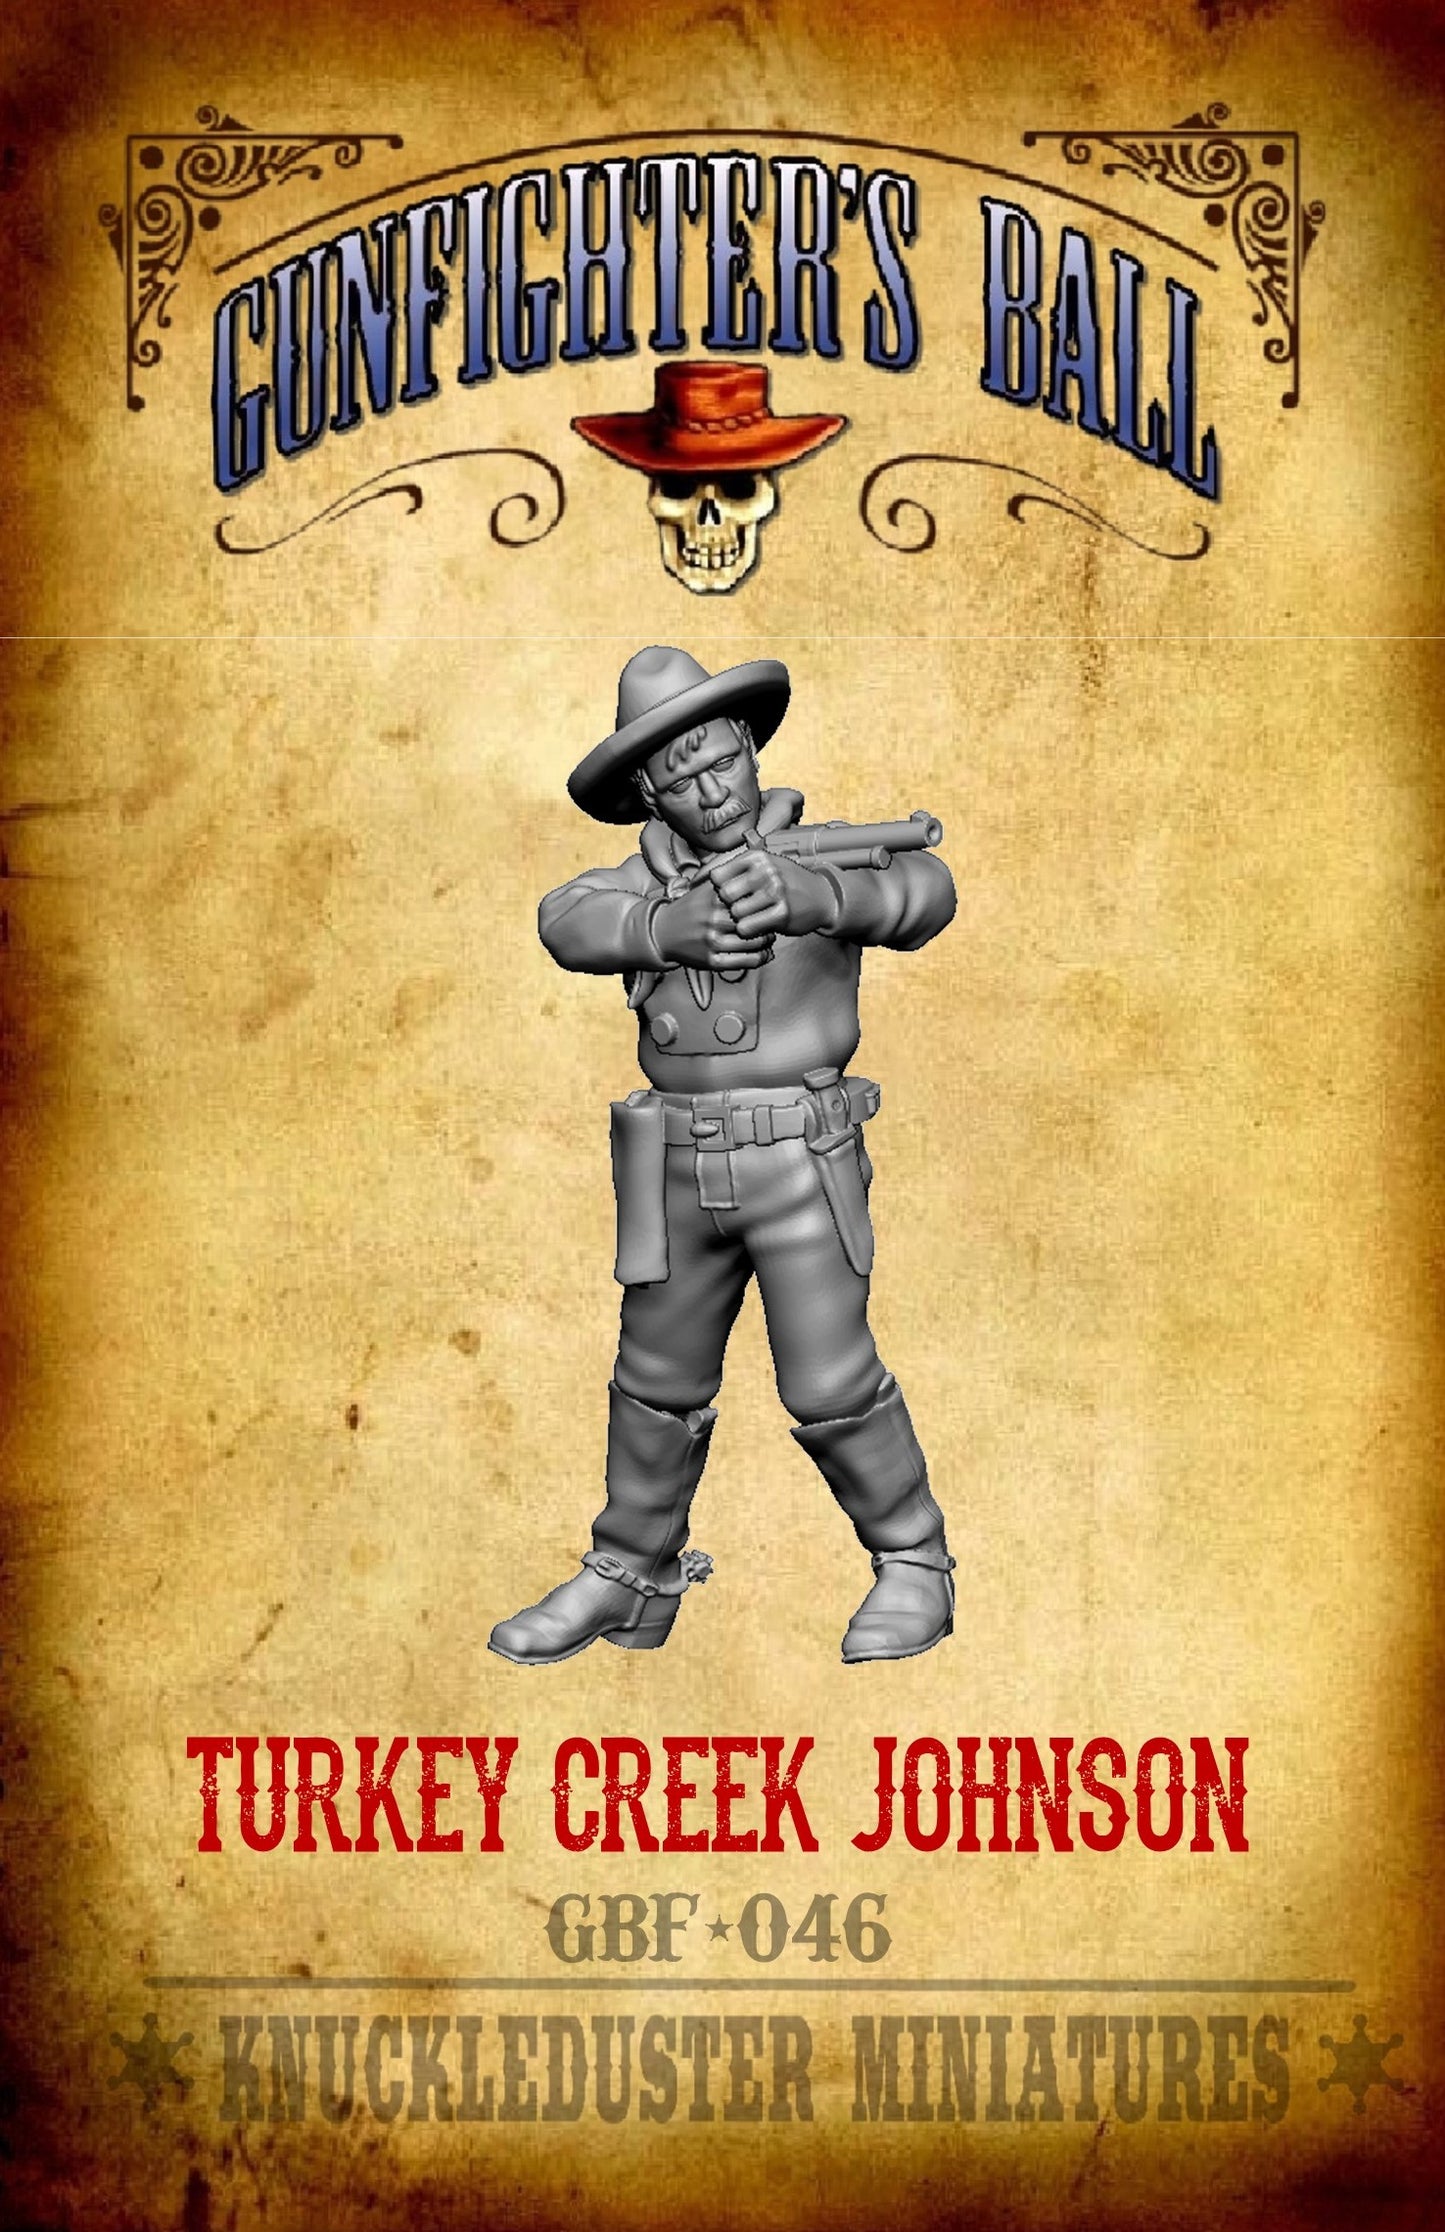 Turkey Creek Johnson